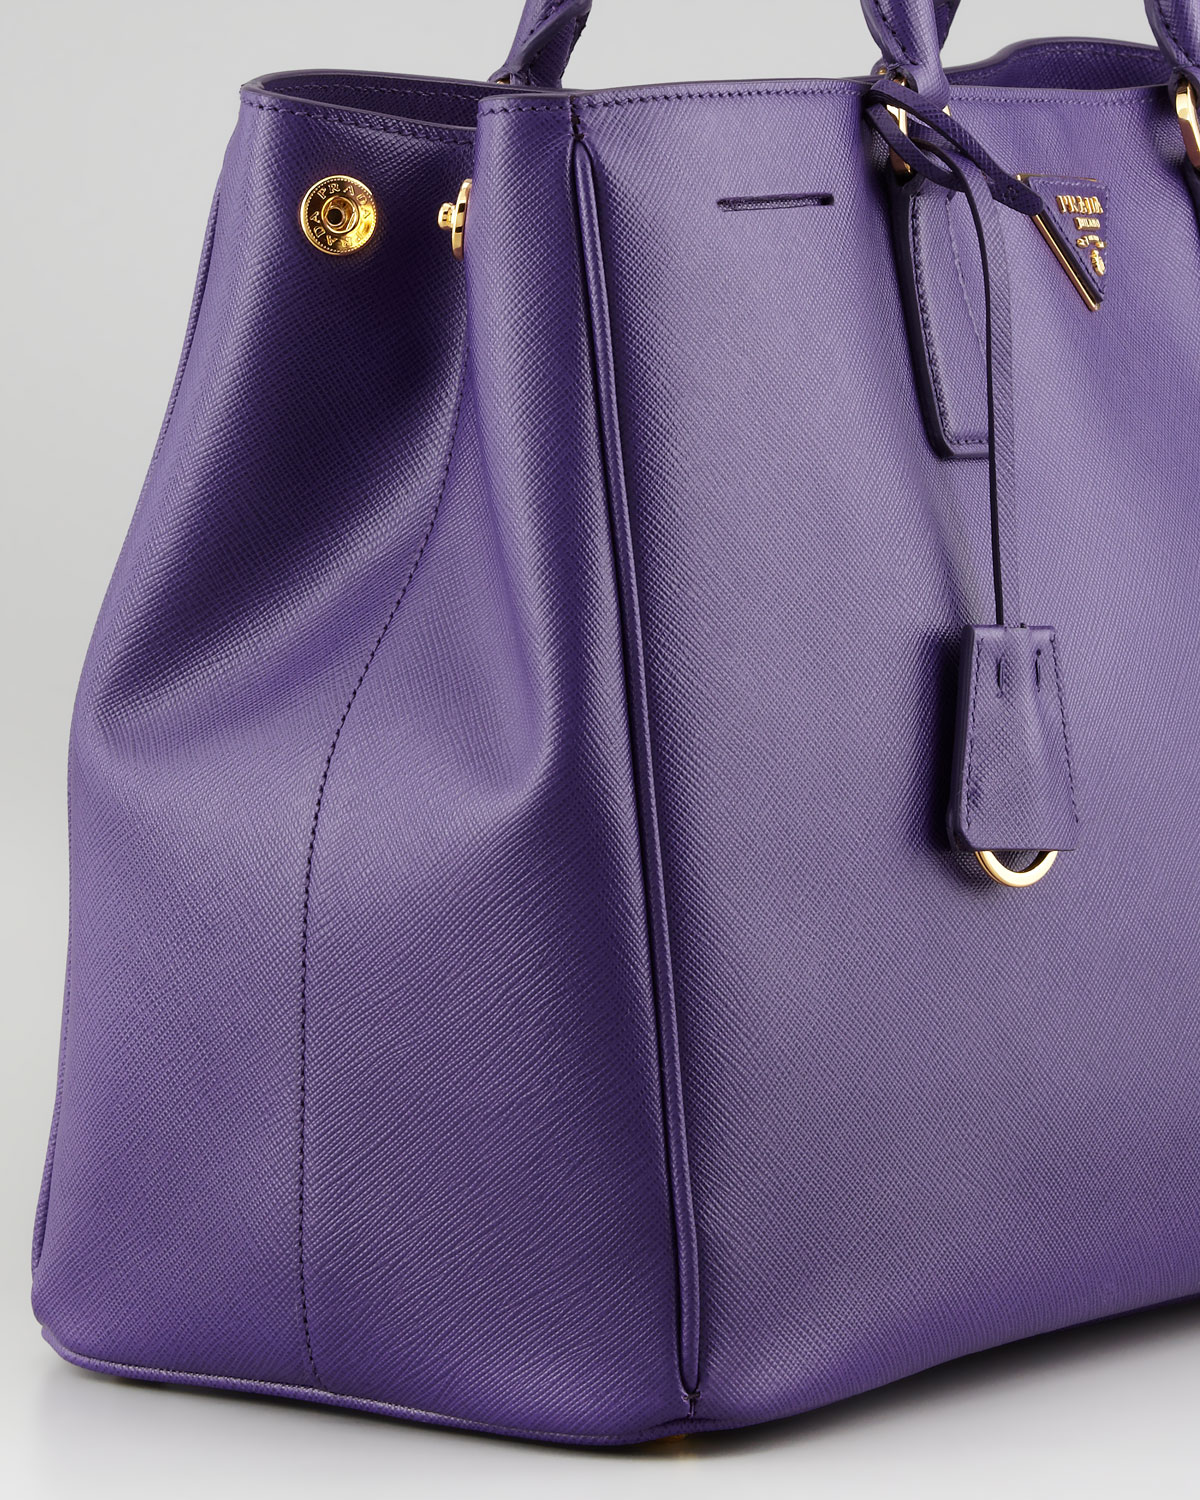 Prada Saffiano Gardners Tote Bag Purple in Purple | Lyst  